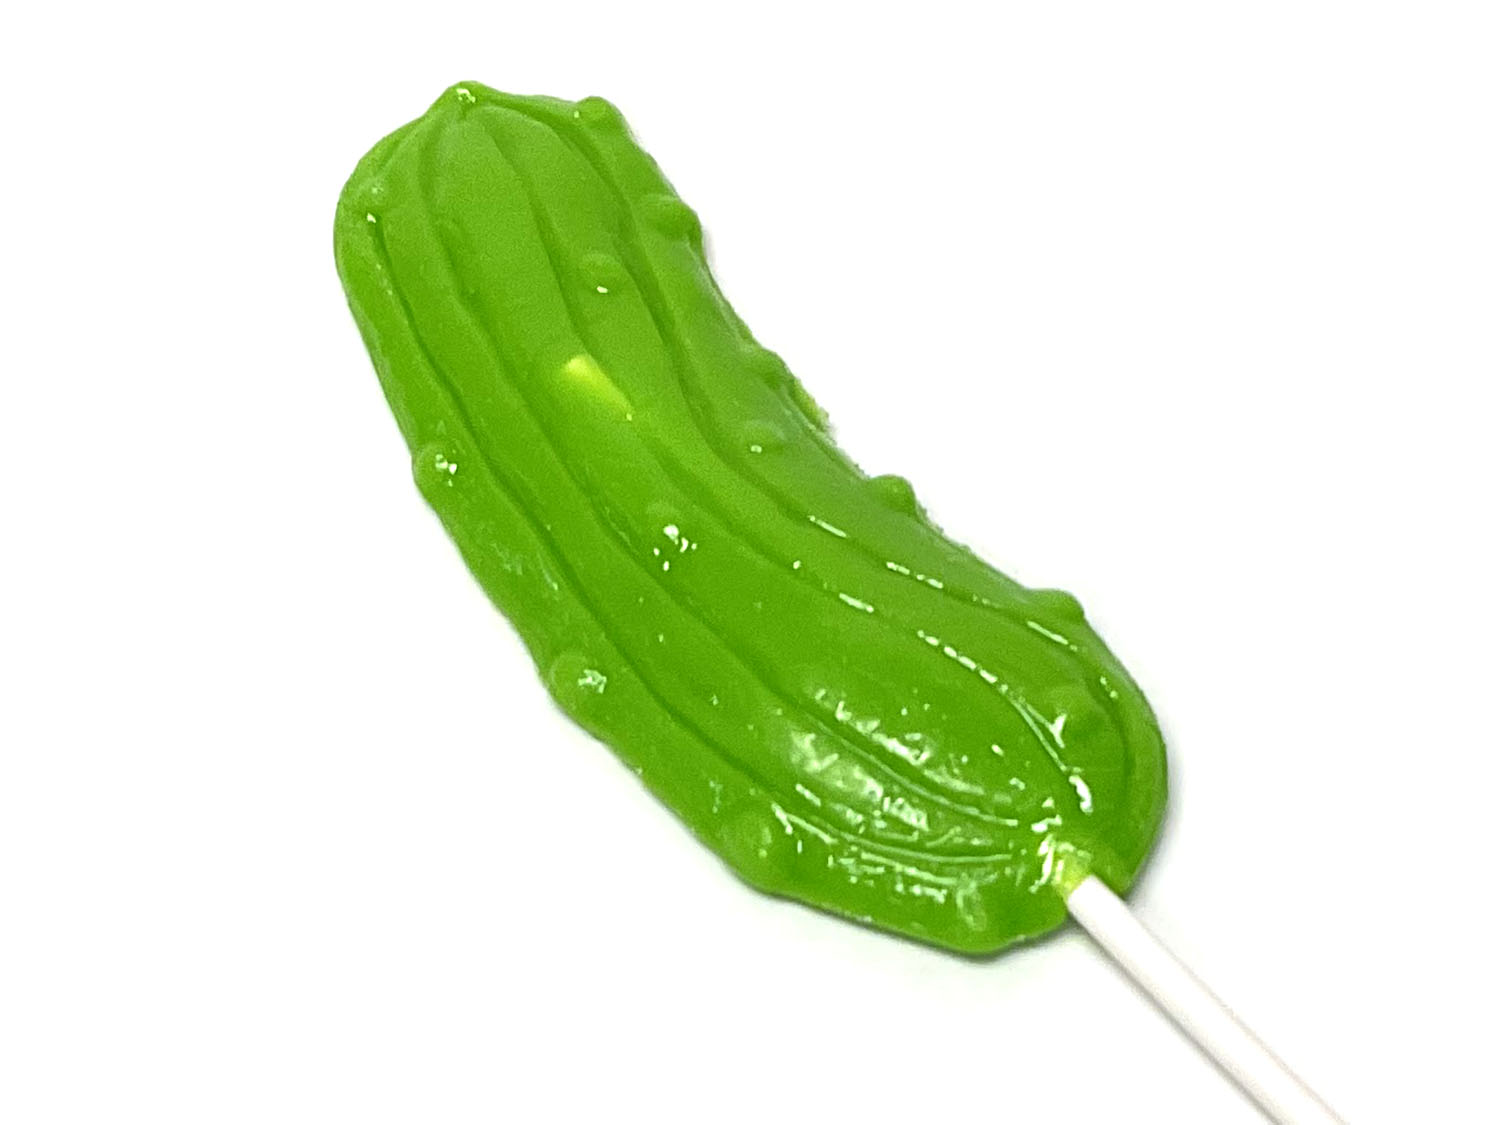 Sour Pickle Pop - unwrapped